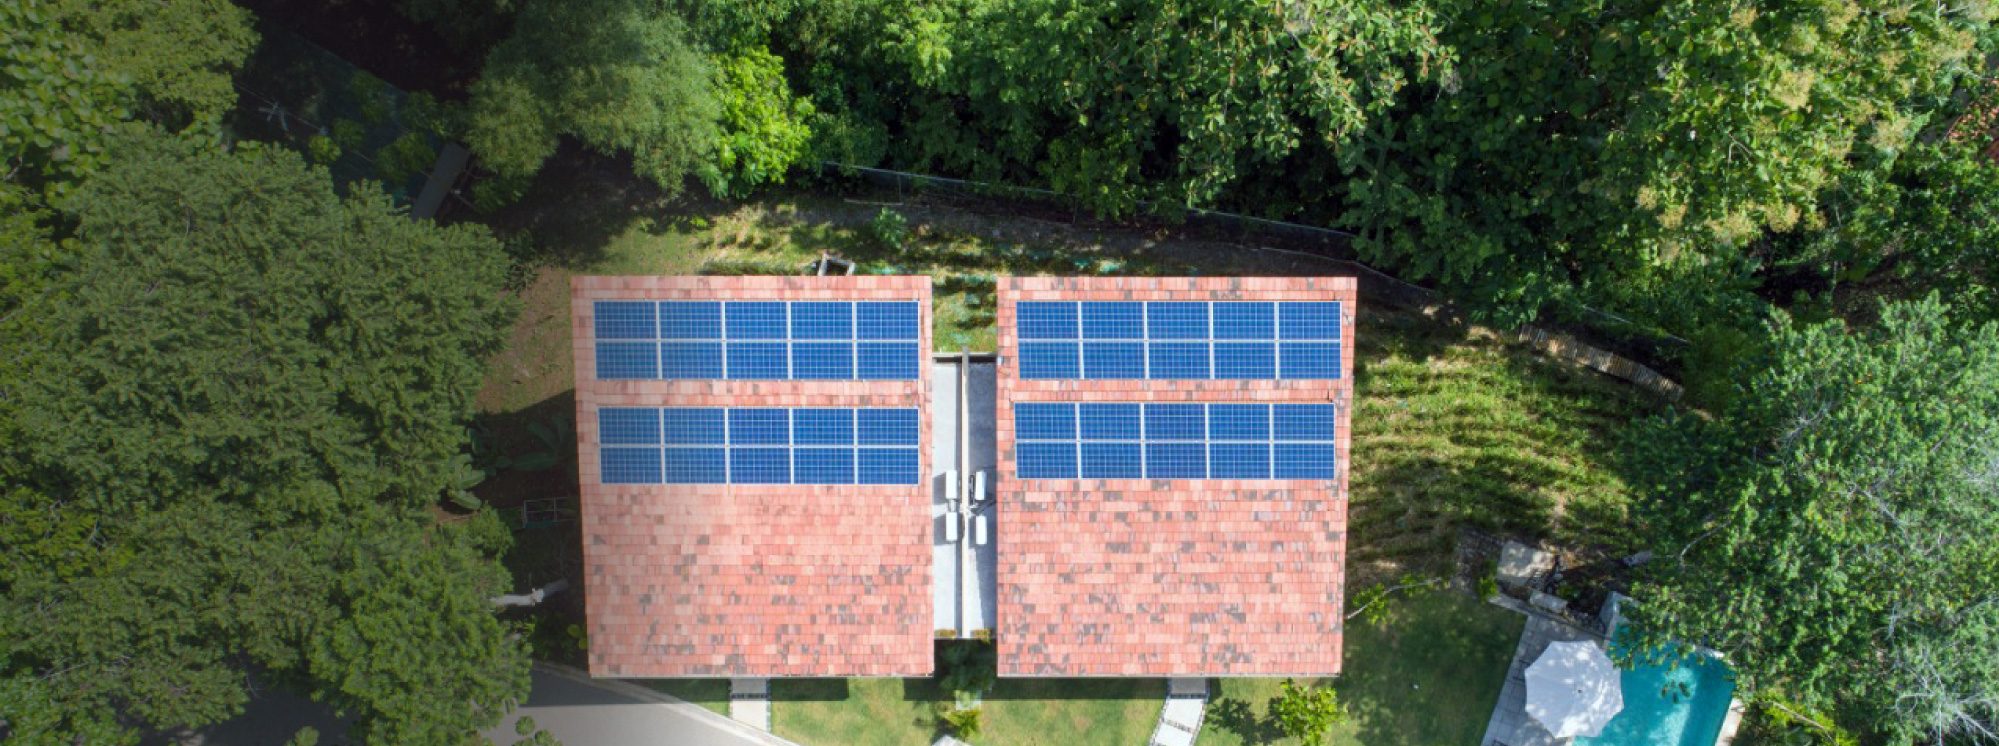 cotizar paneles solares costa rica